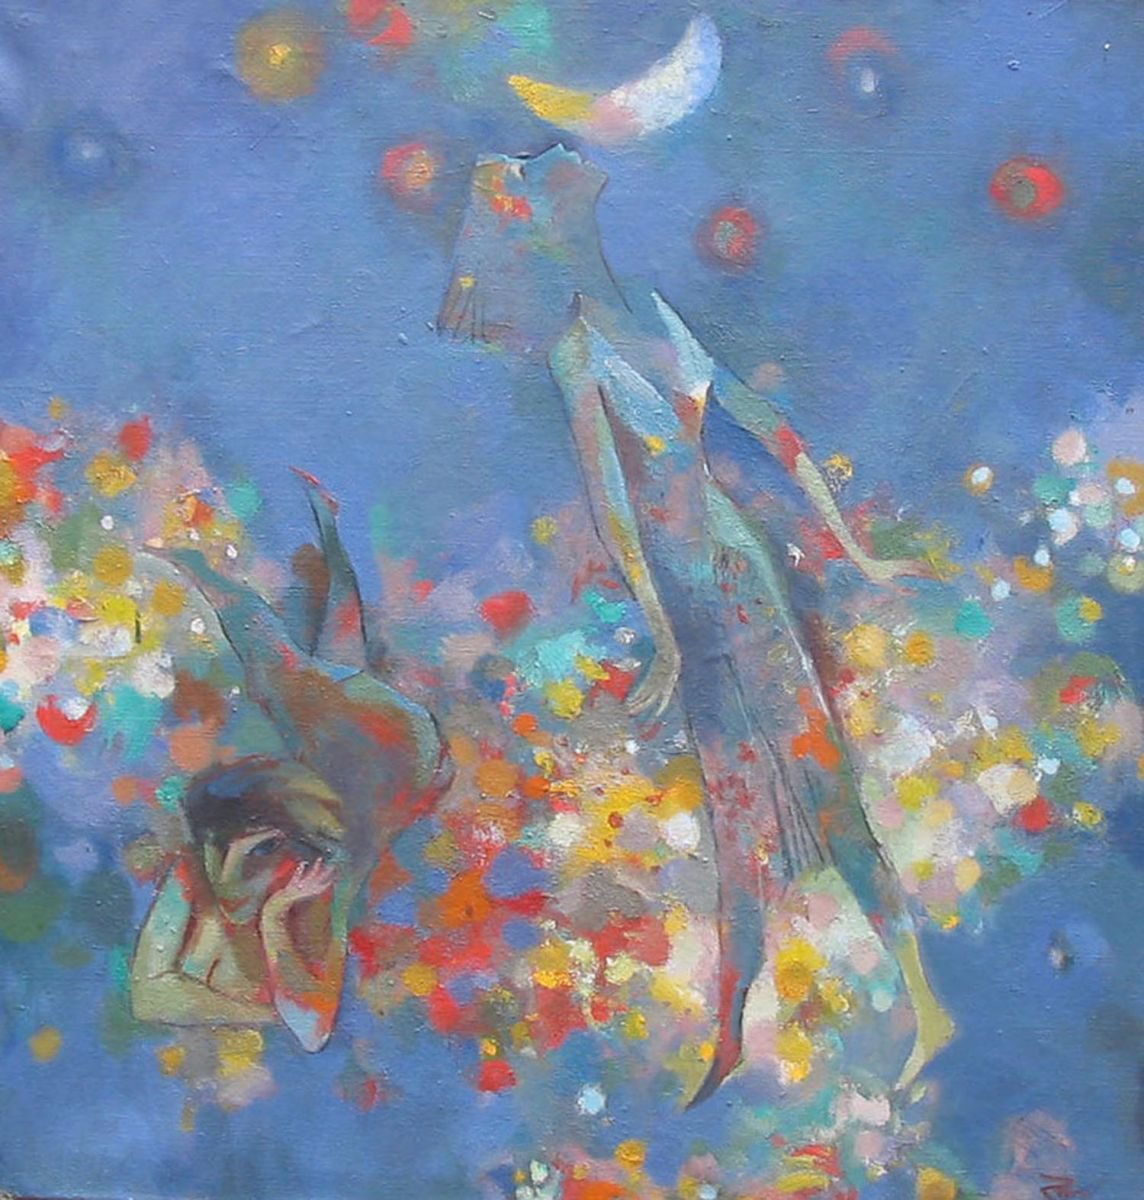 Kiss Of The Moon by Teimuraz Gagnidze